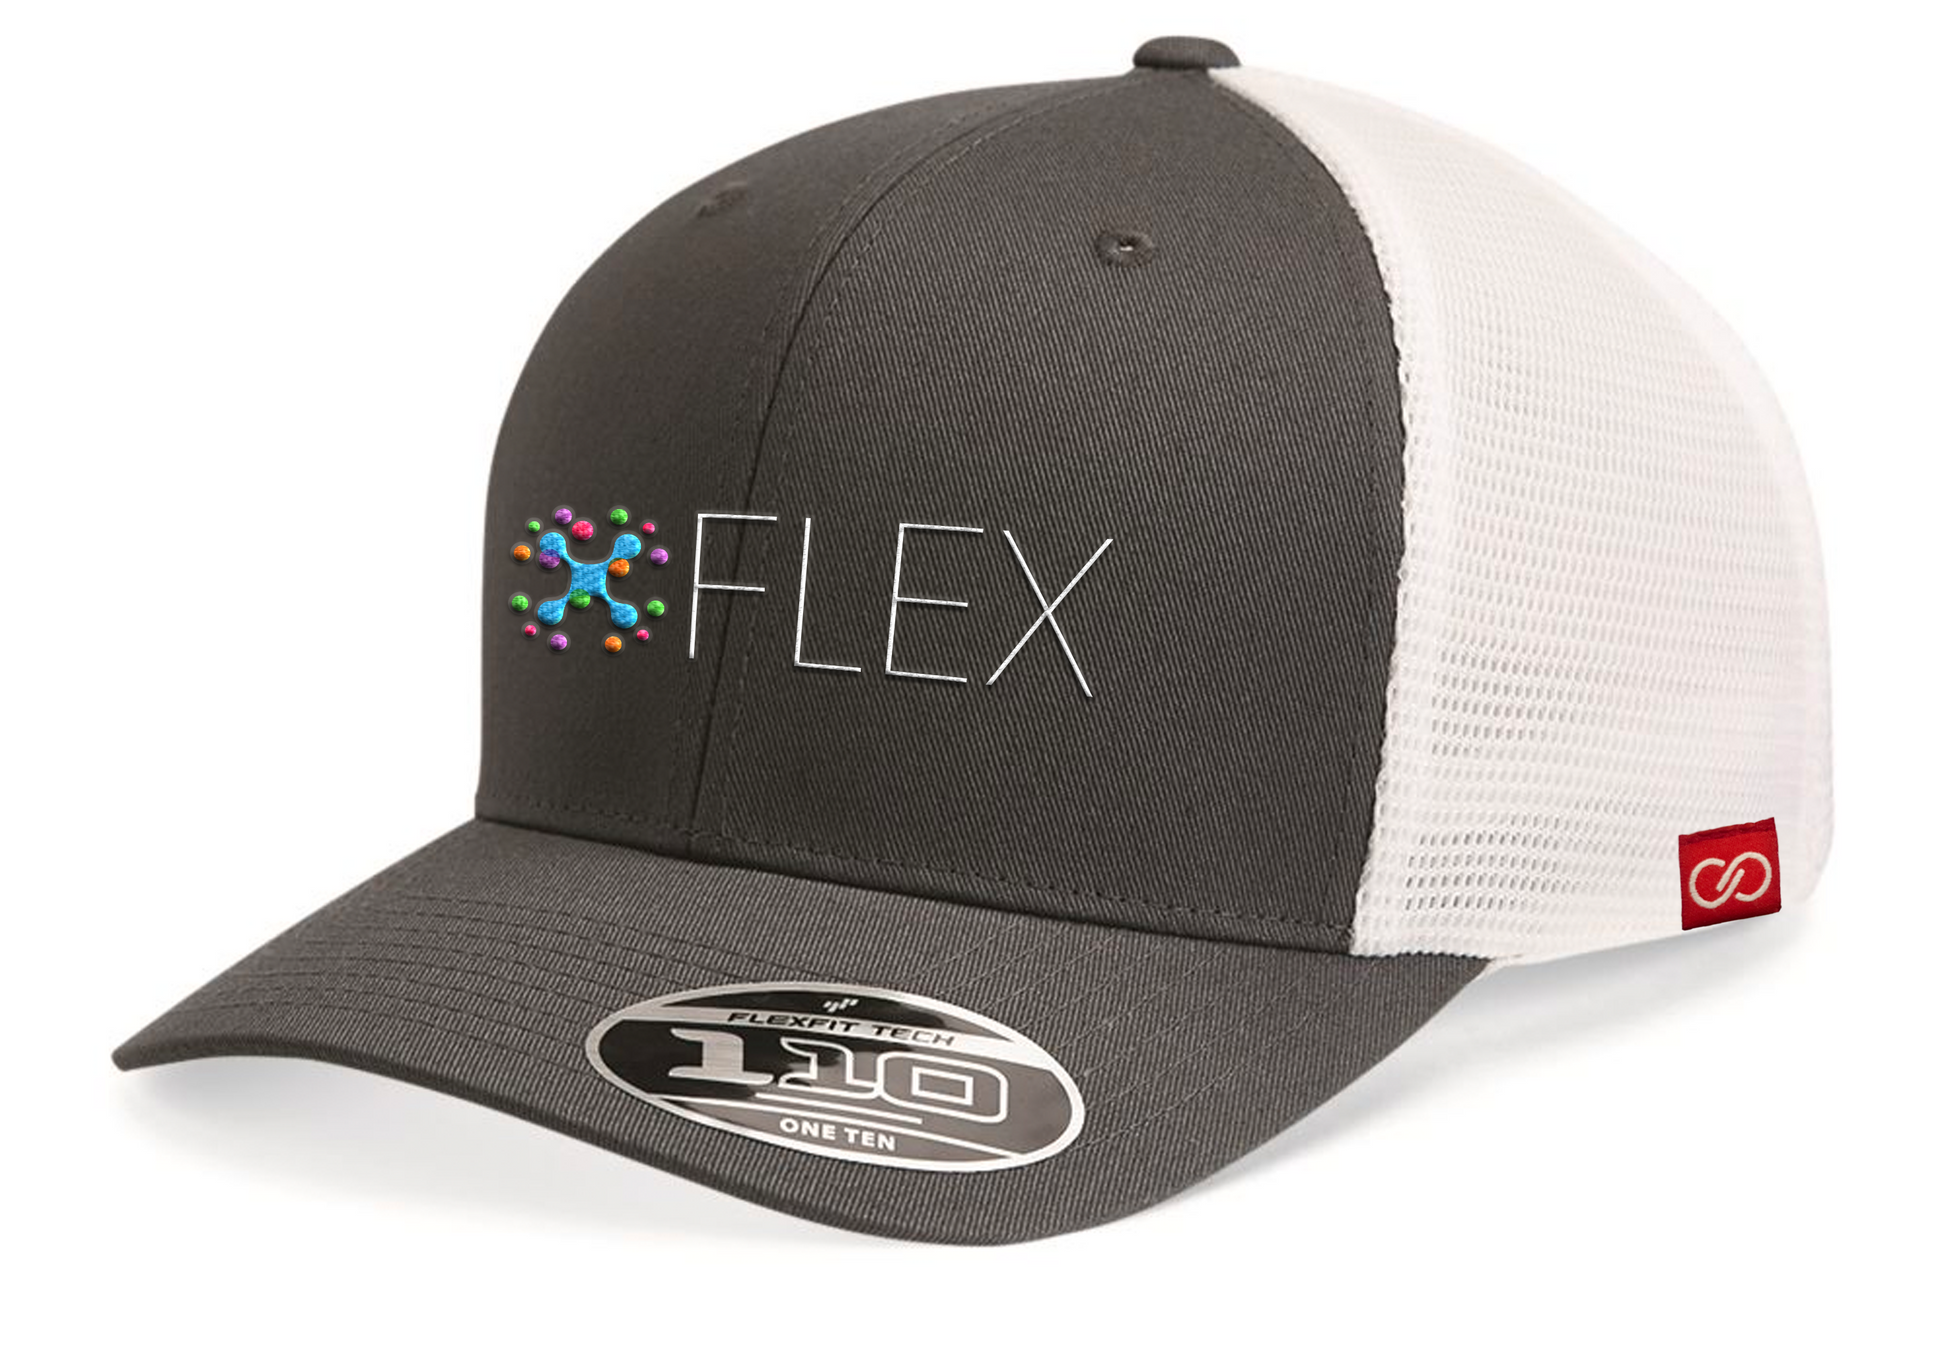 FLEX charcoal snapback white FLEX gray – Gear hat 